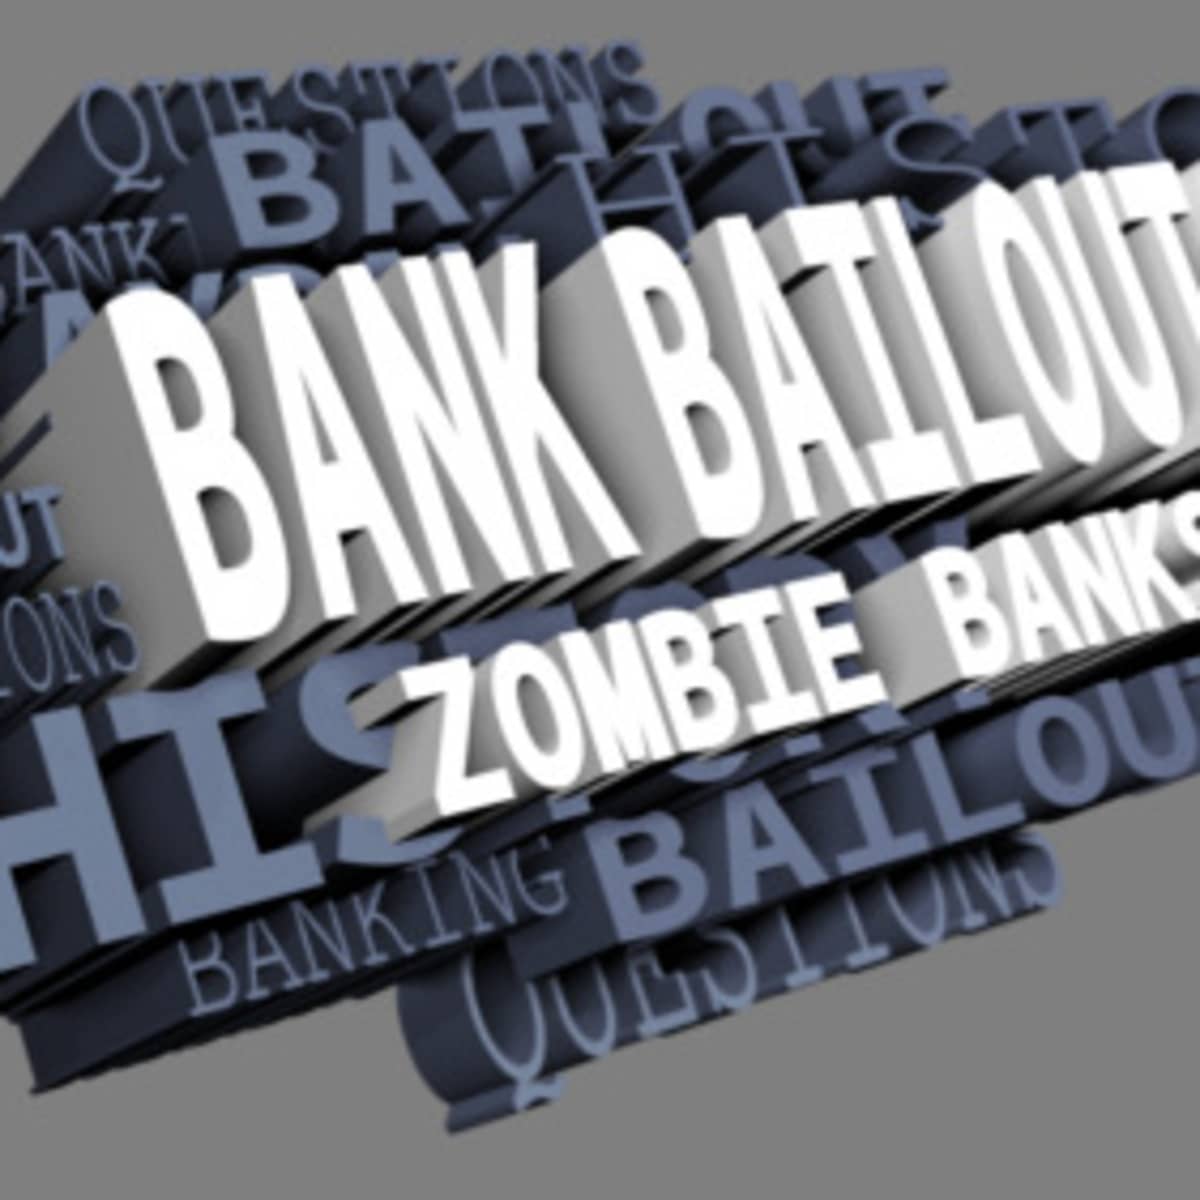 history-of-bank-bailouts.jpg